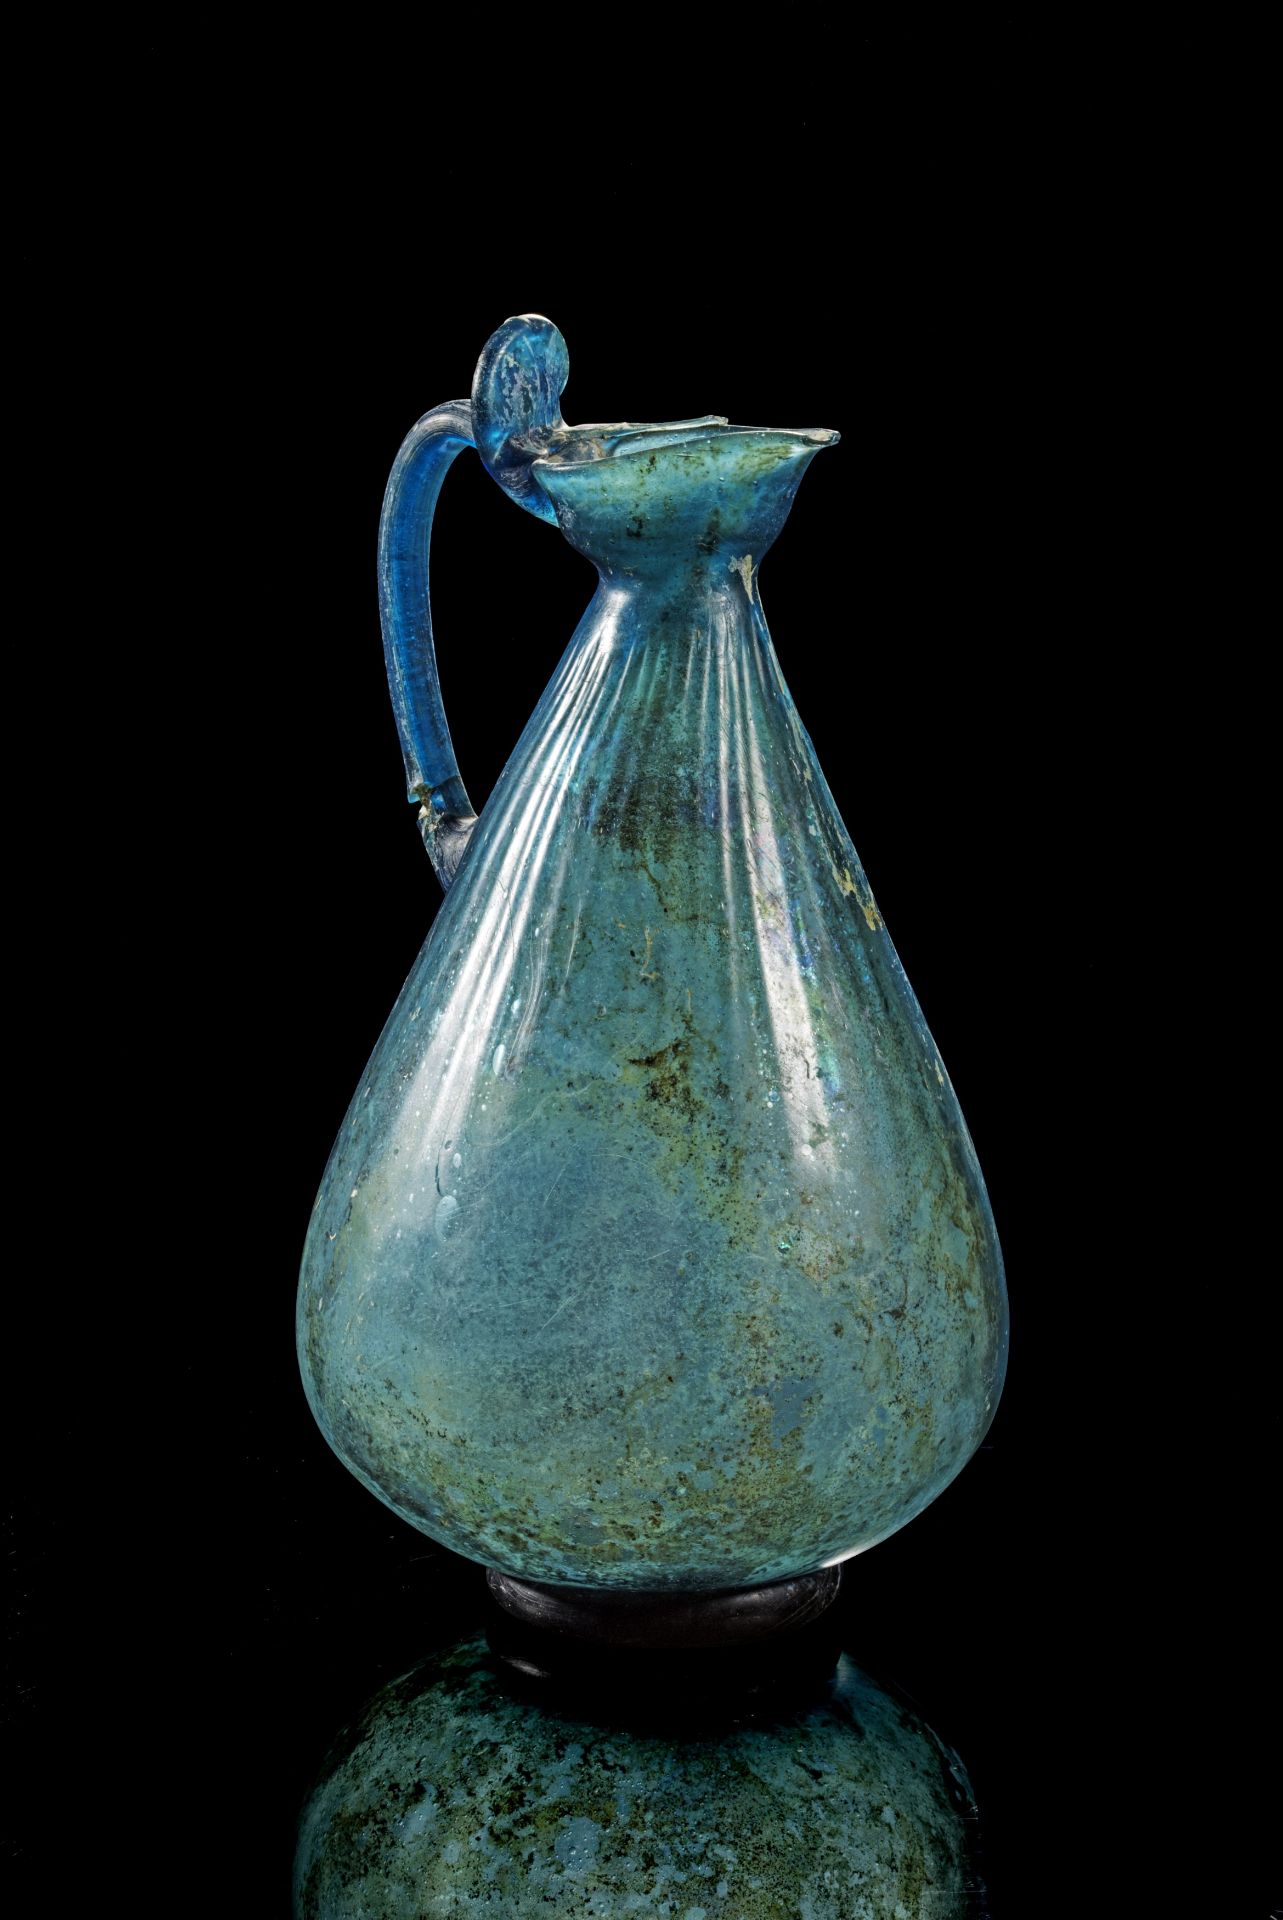 Beautiful early Islamic jug of blue glass.